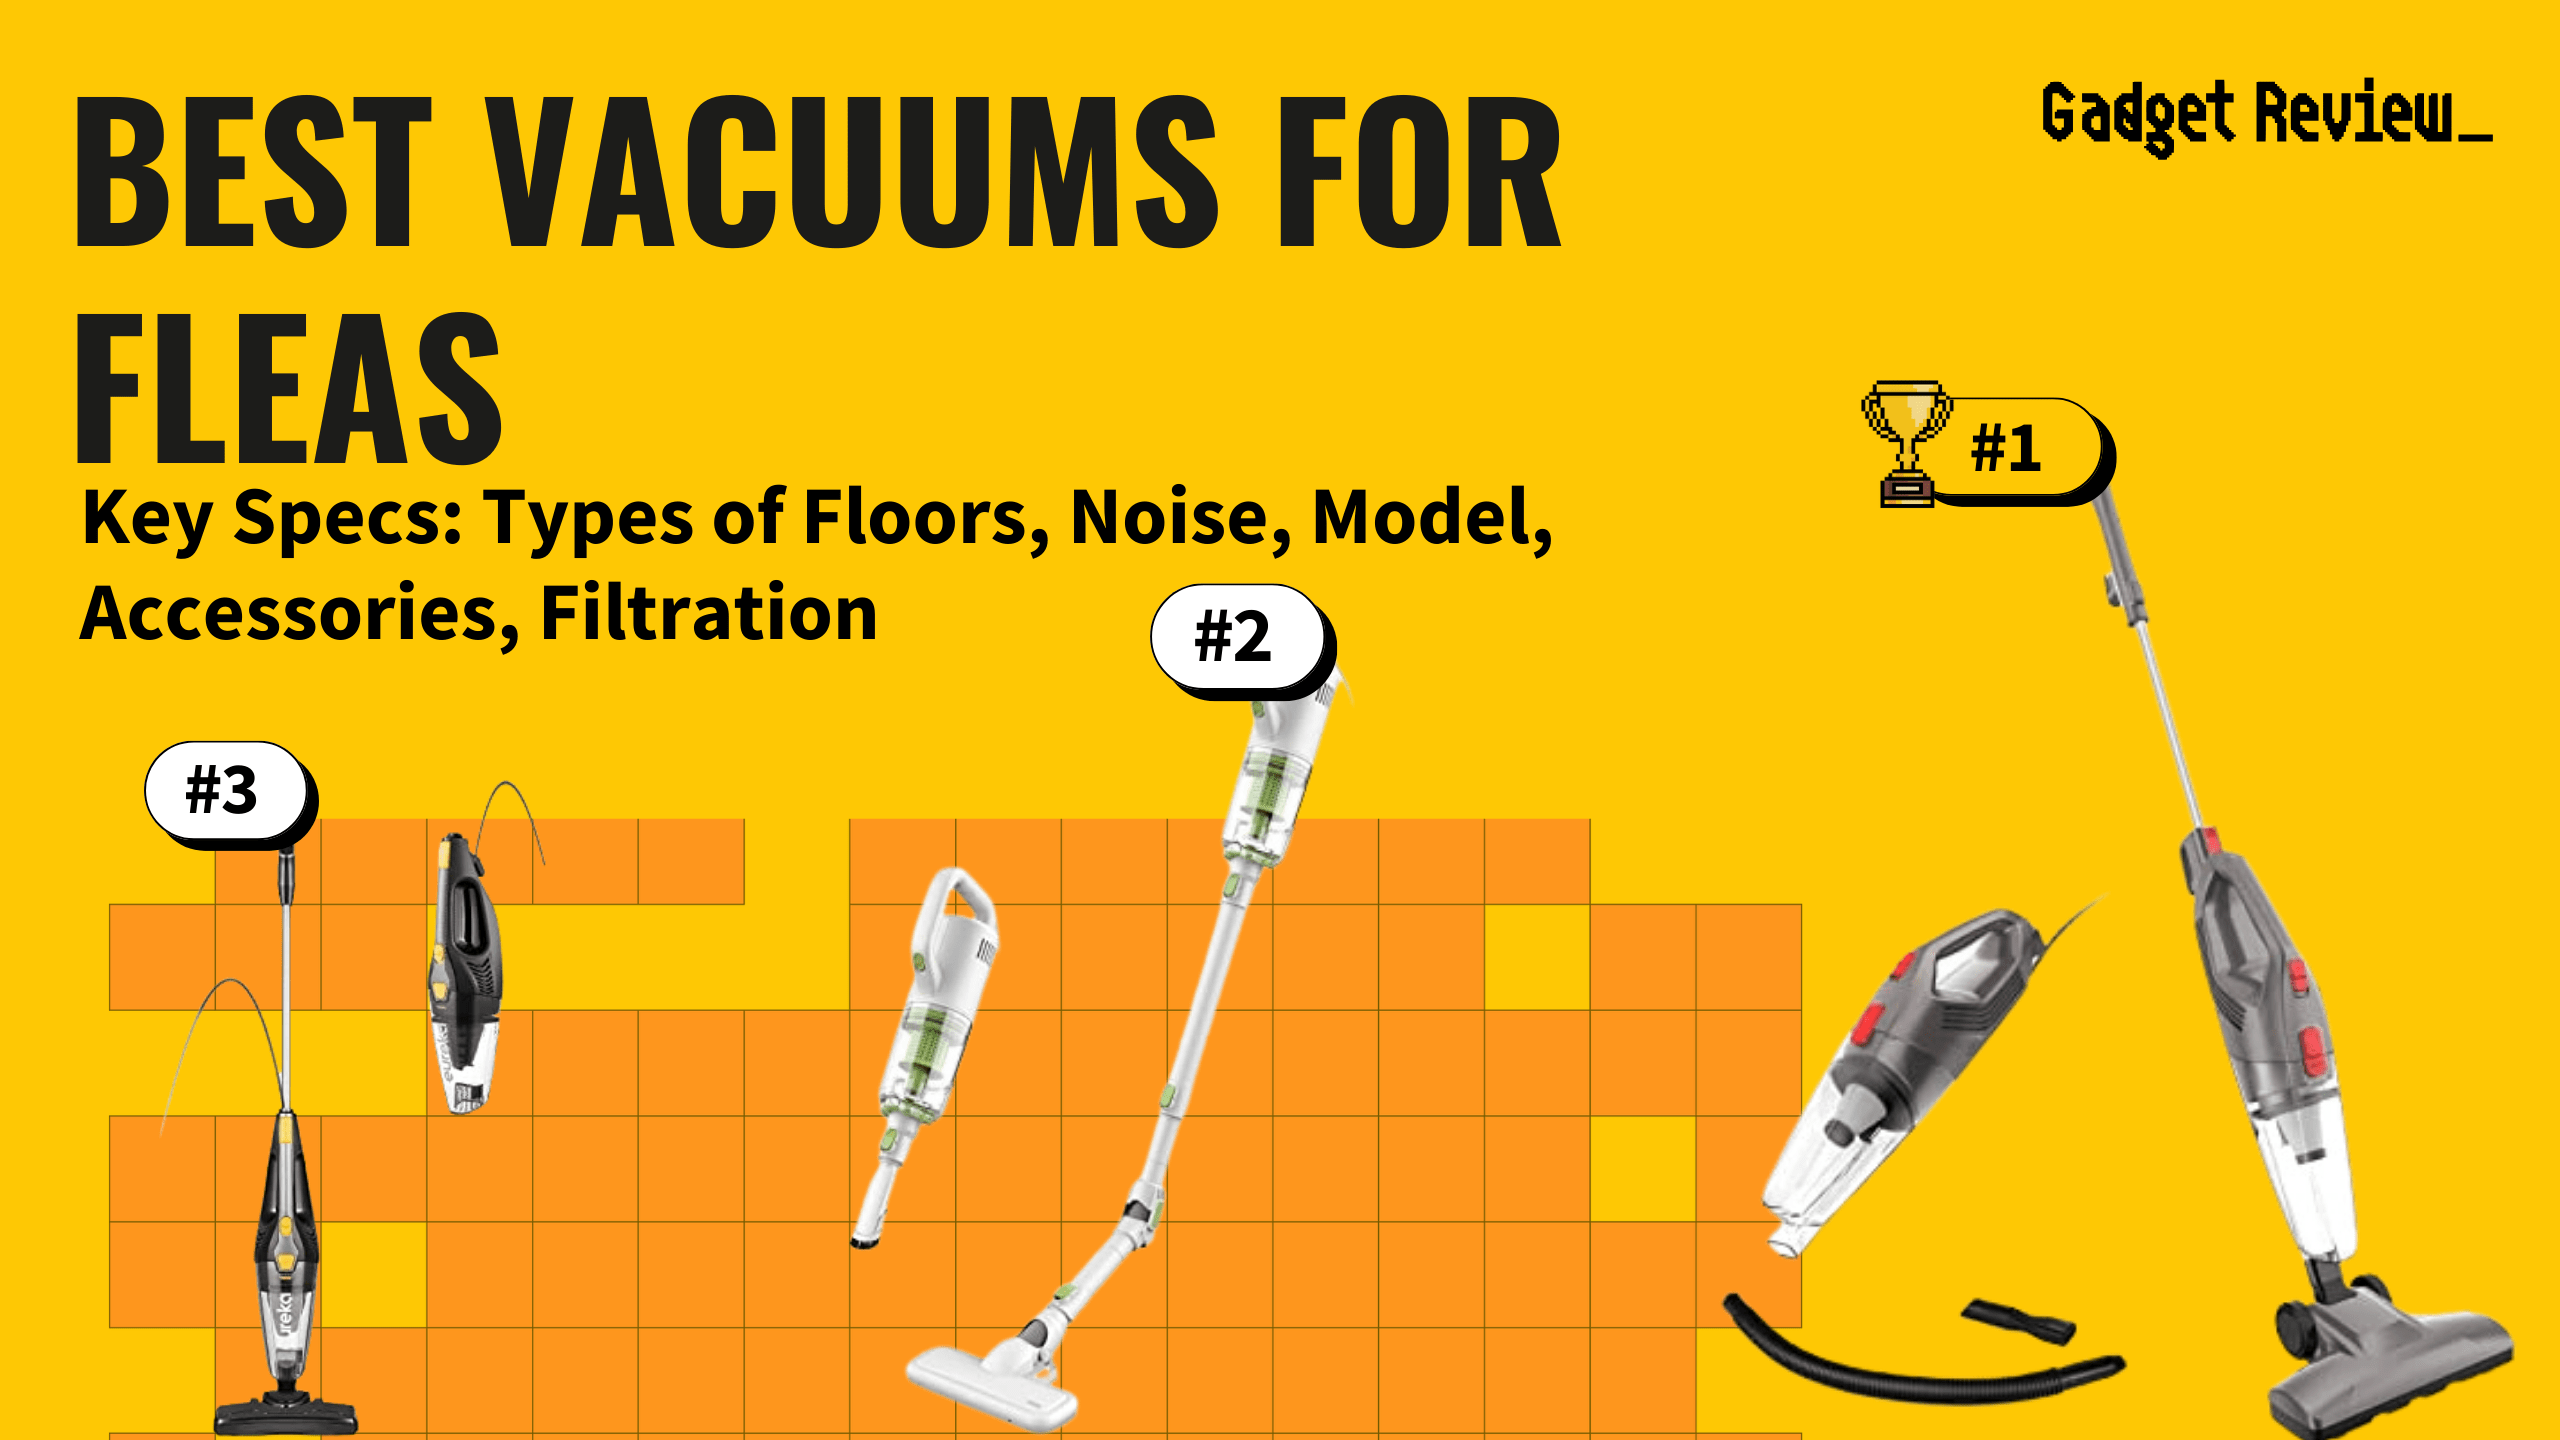 Best Vacuums for Fleas